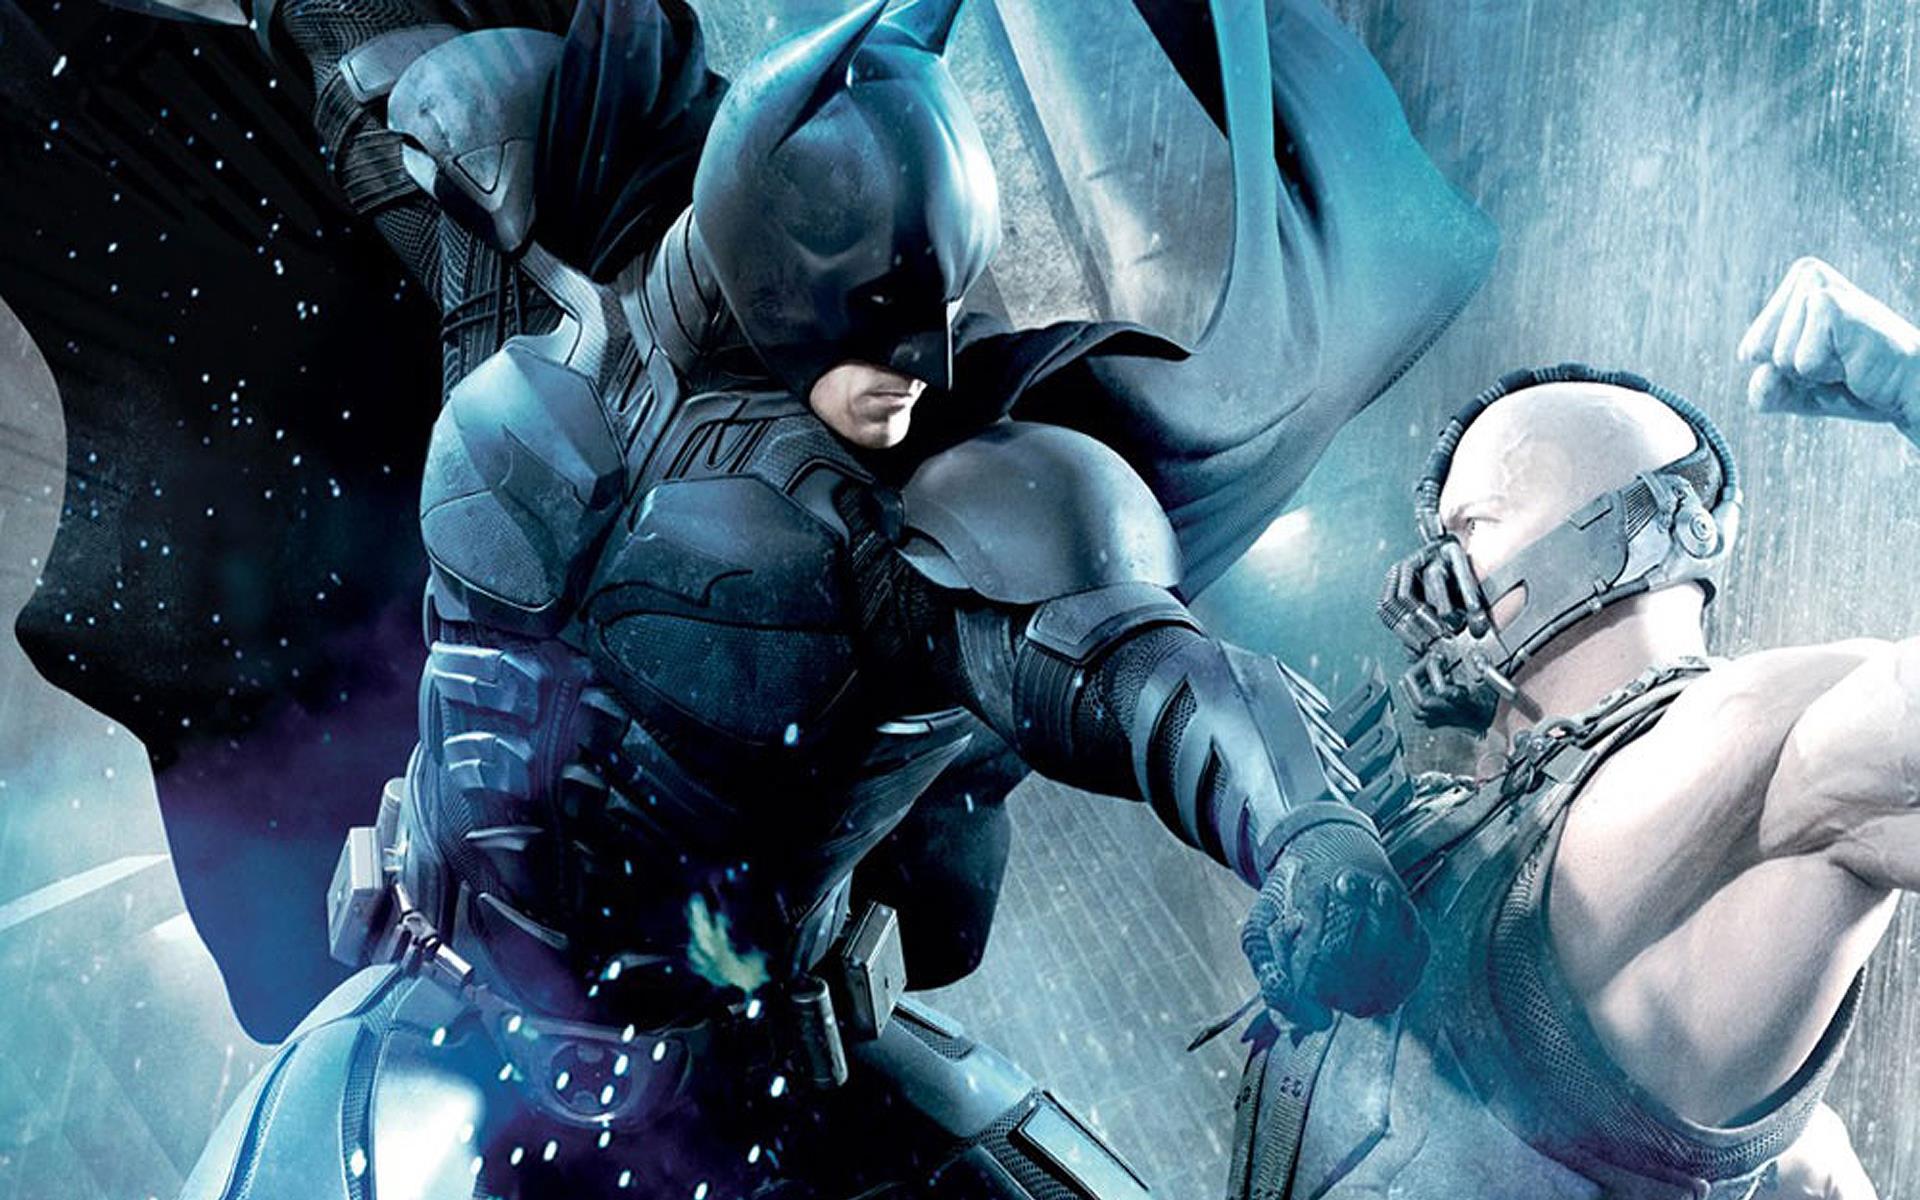 the dark knight rises wallpaper hd bane vs batman